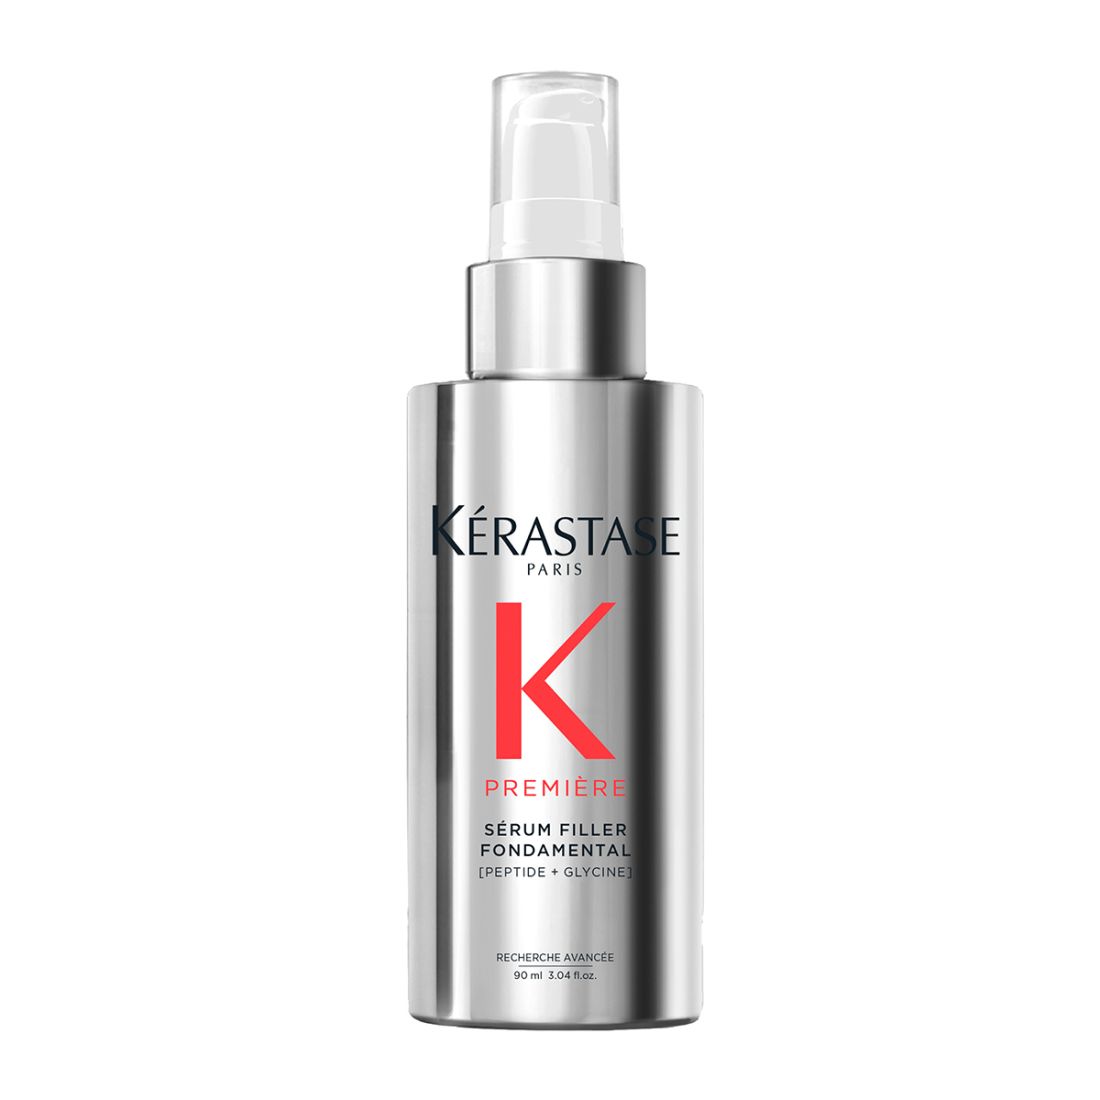 Kérastase Première Ορός Filler Fondamental για Ταλαιπωρημένα Μαλλιά 90ml